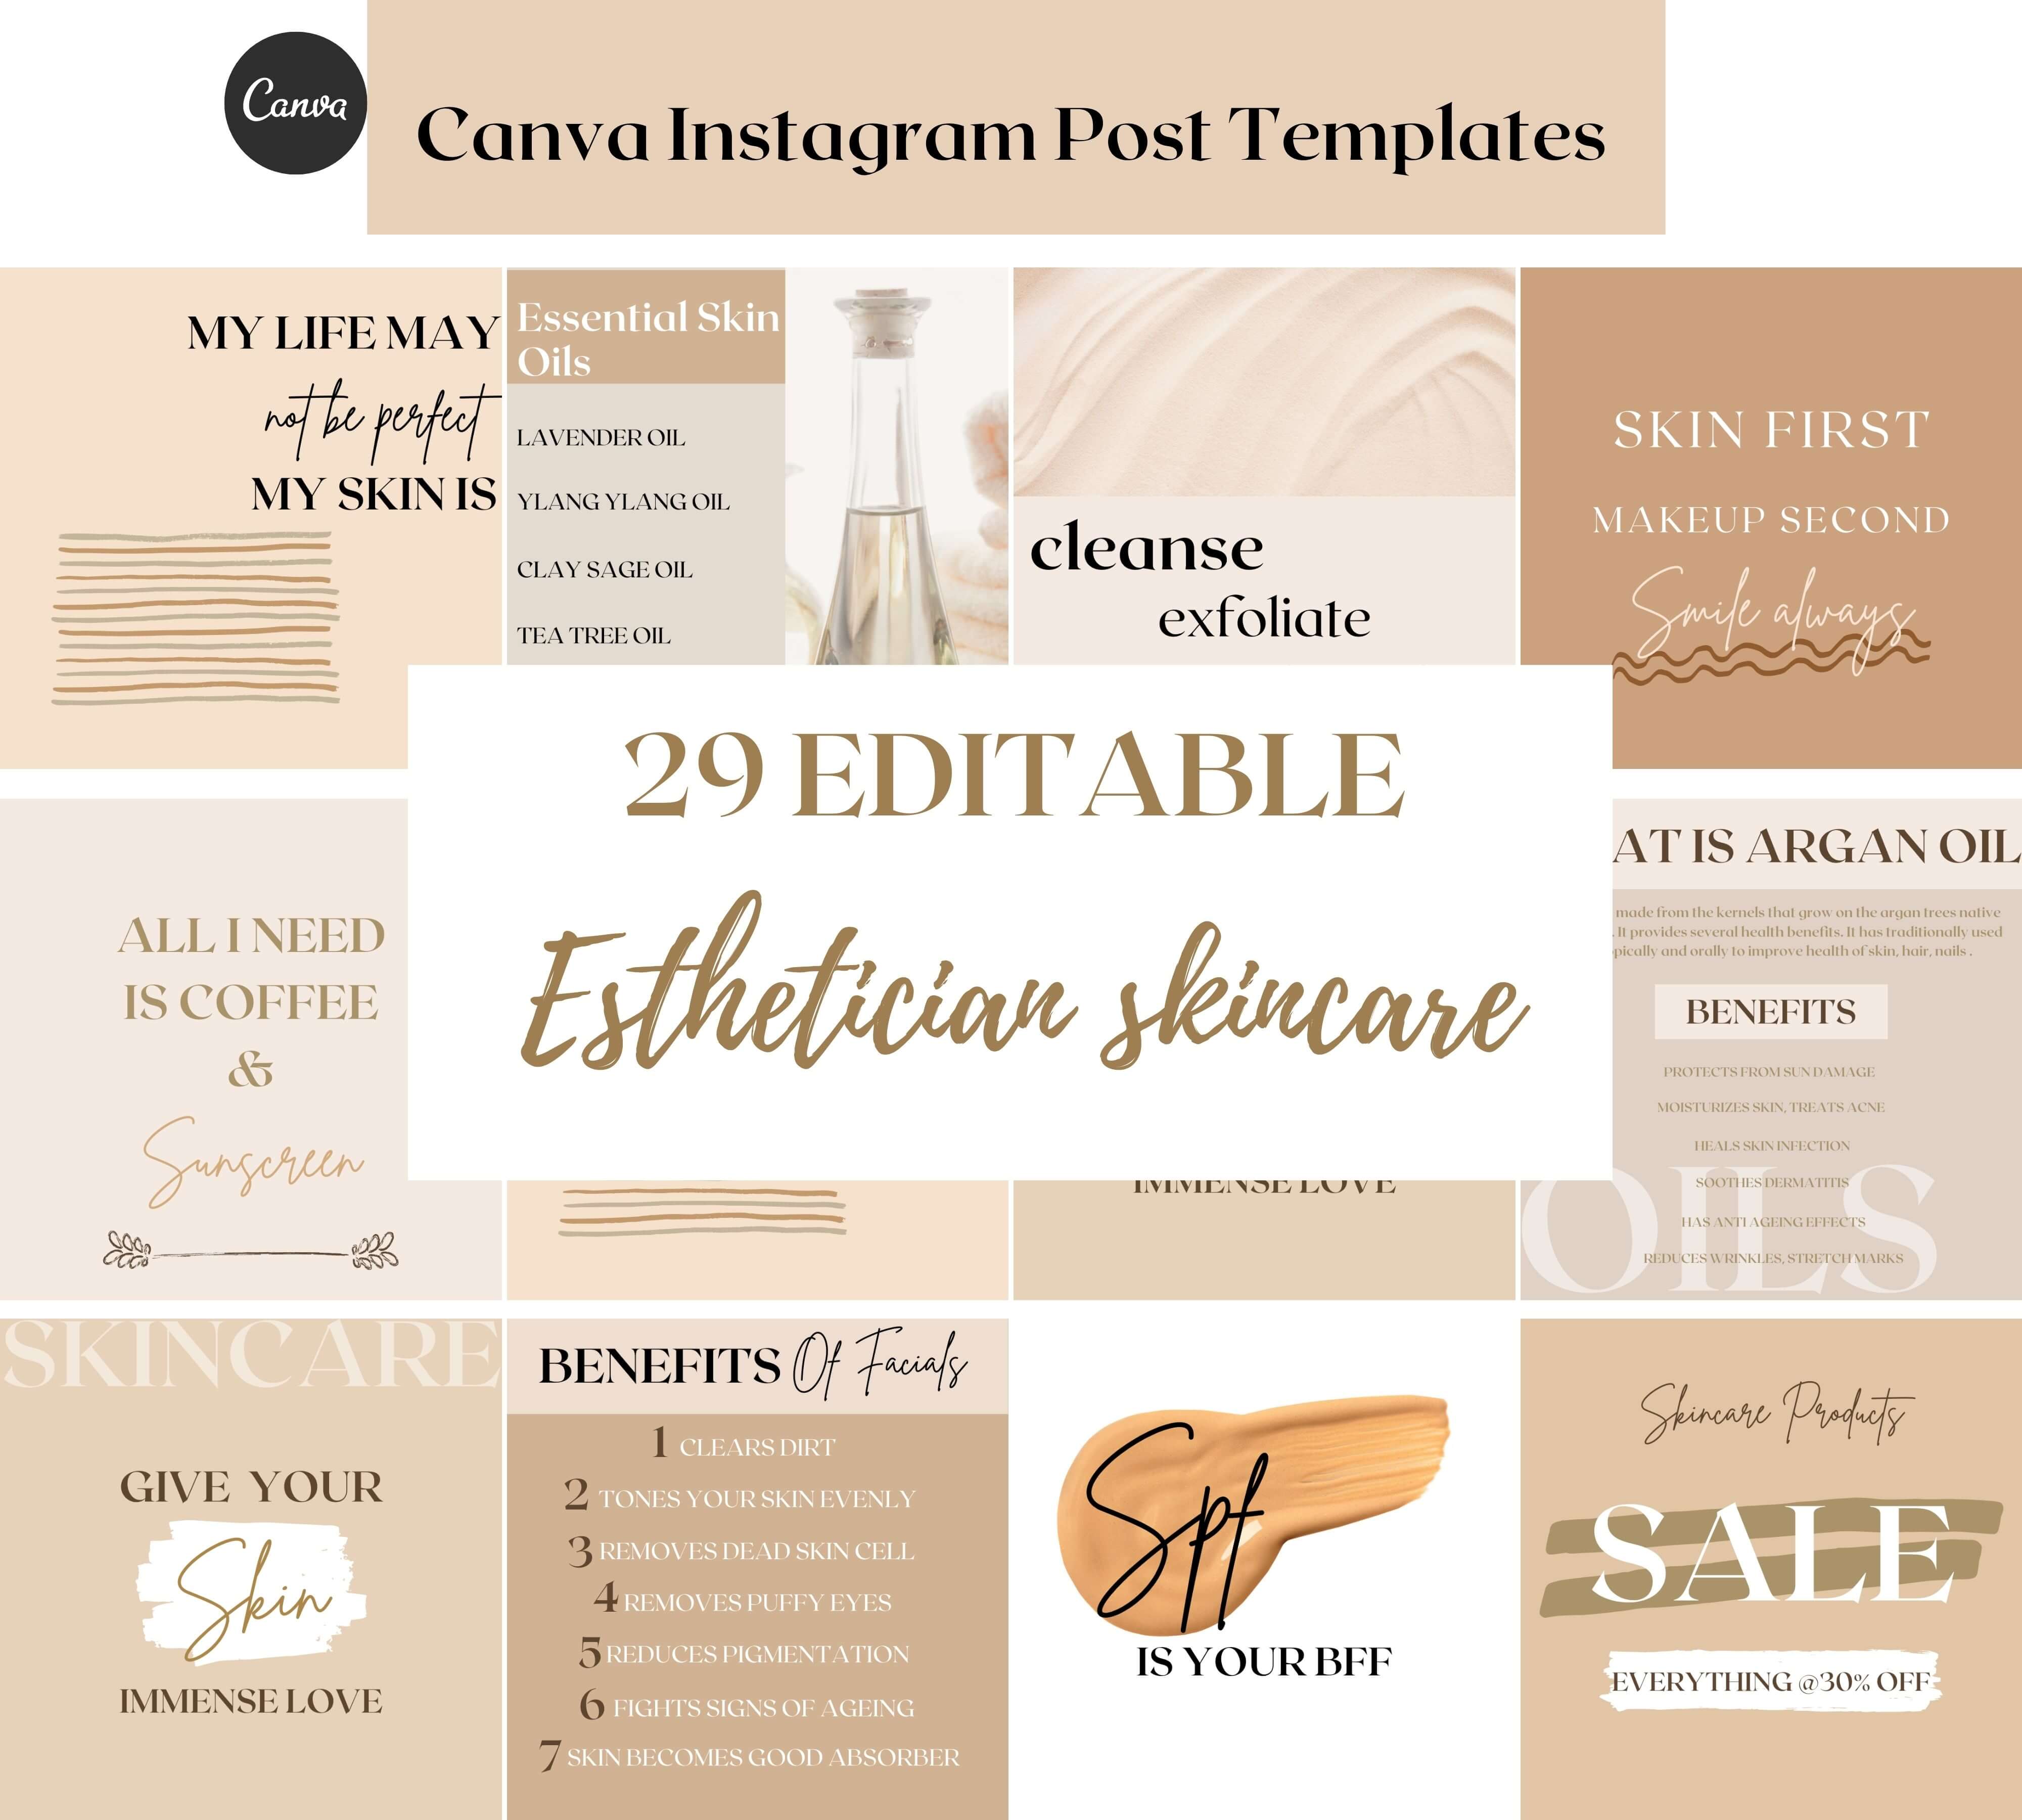 Esthetician canva Instagram templates